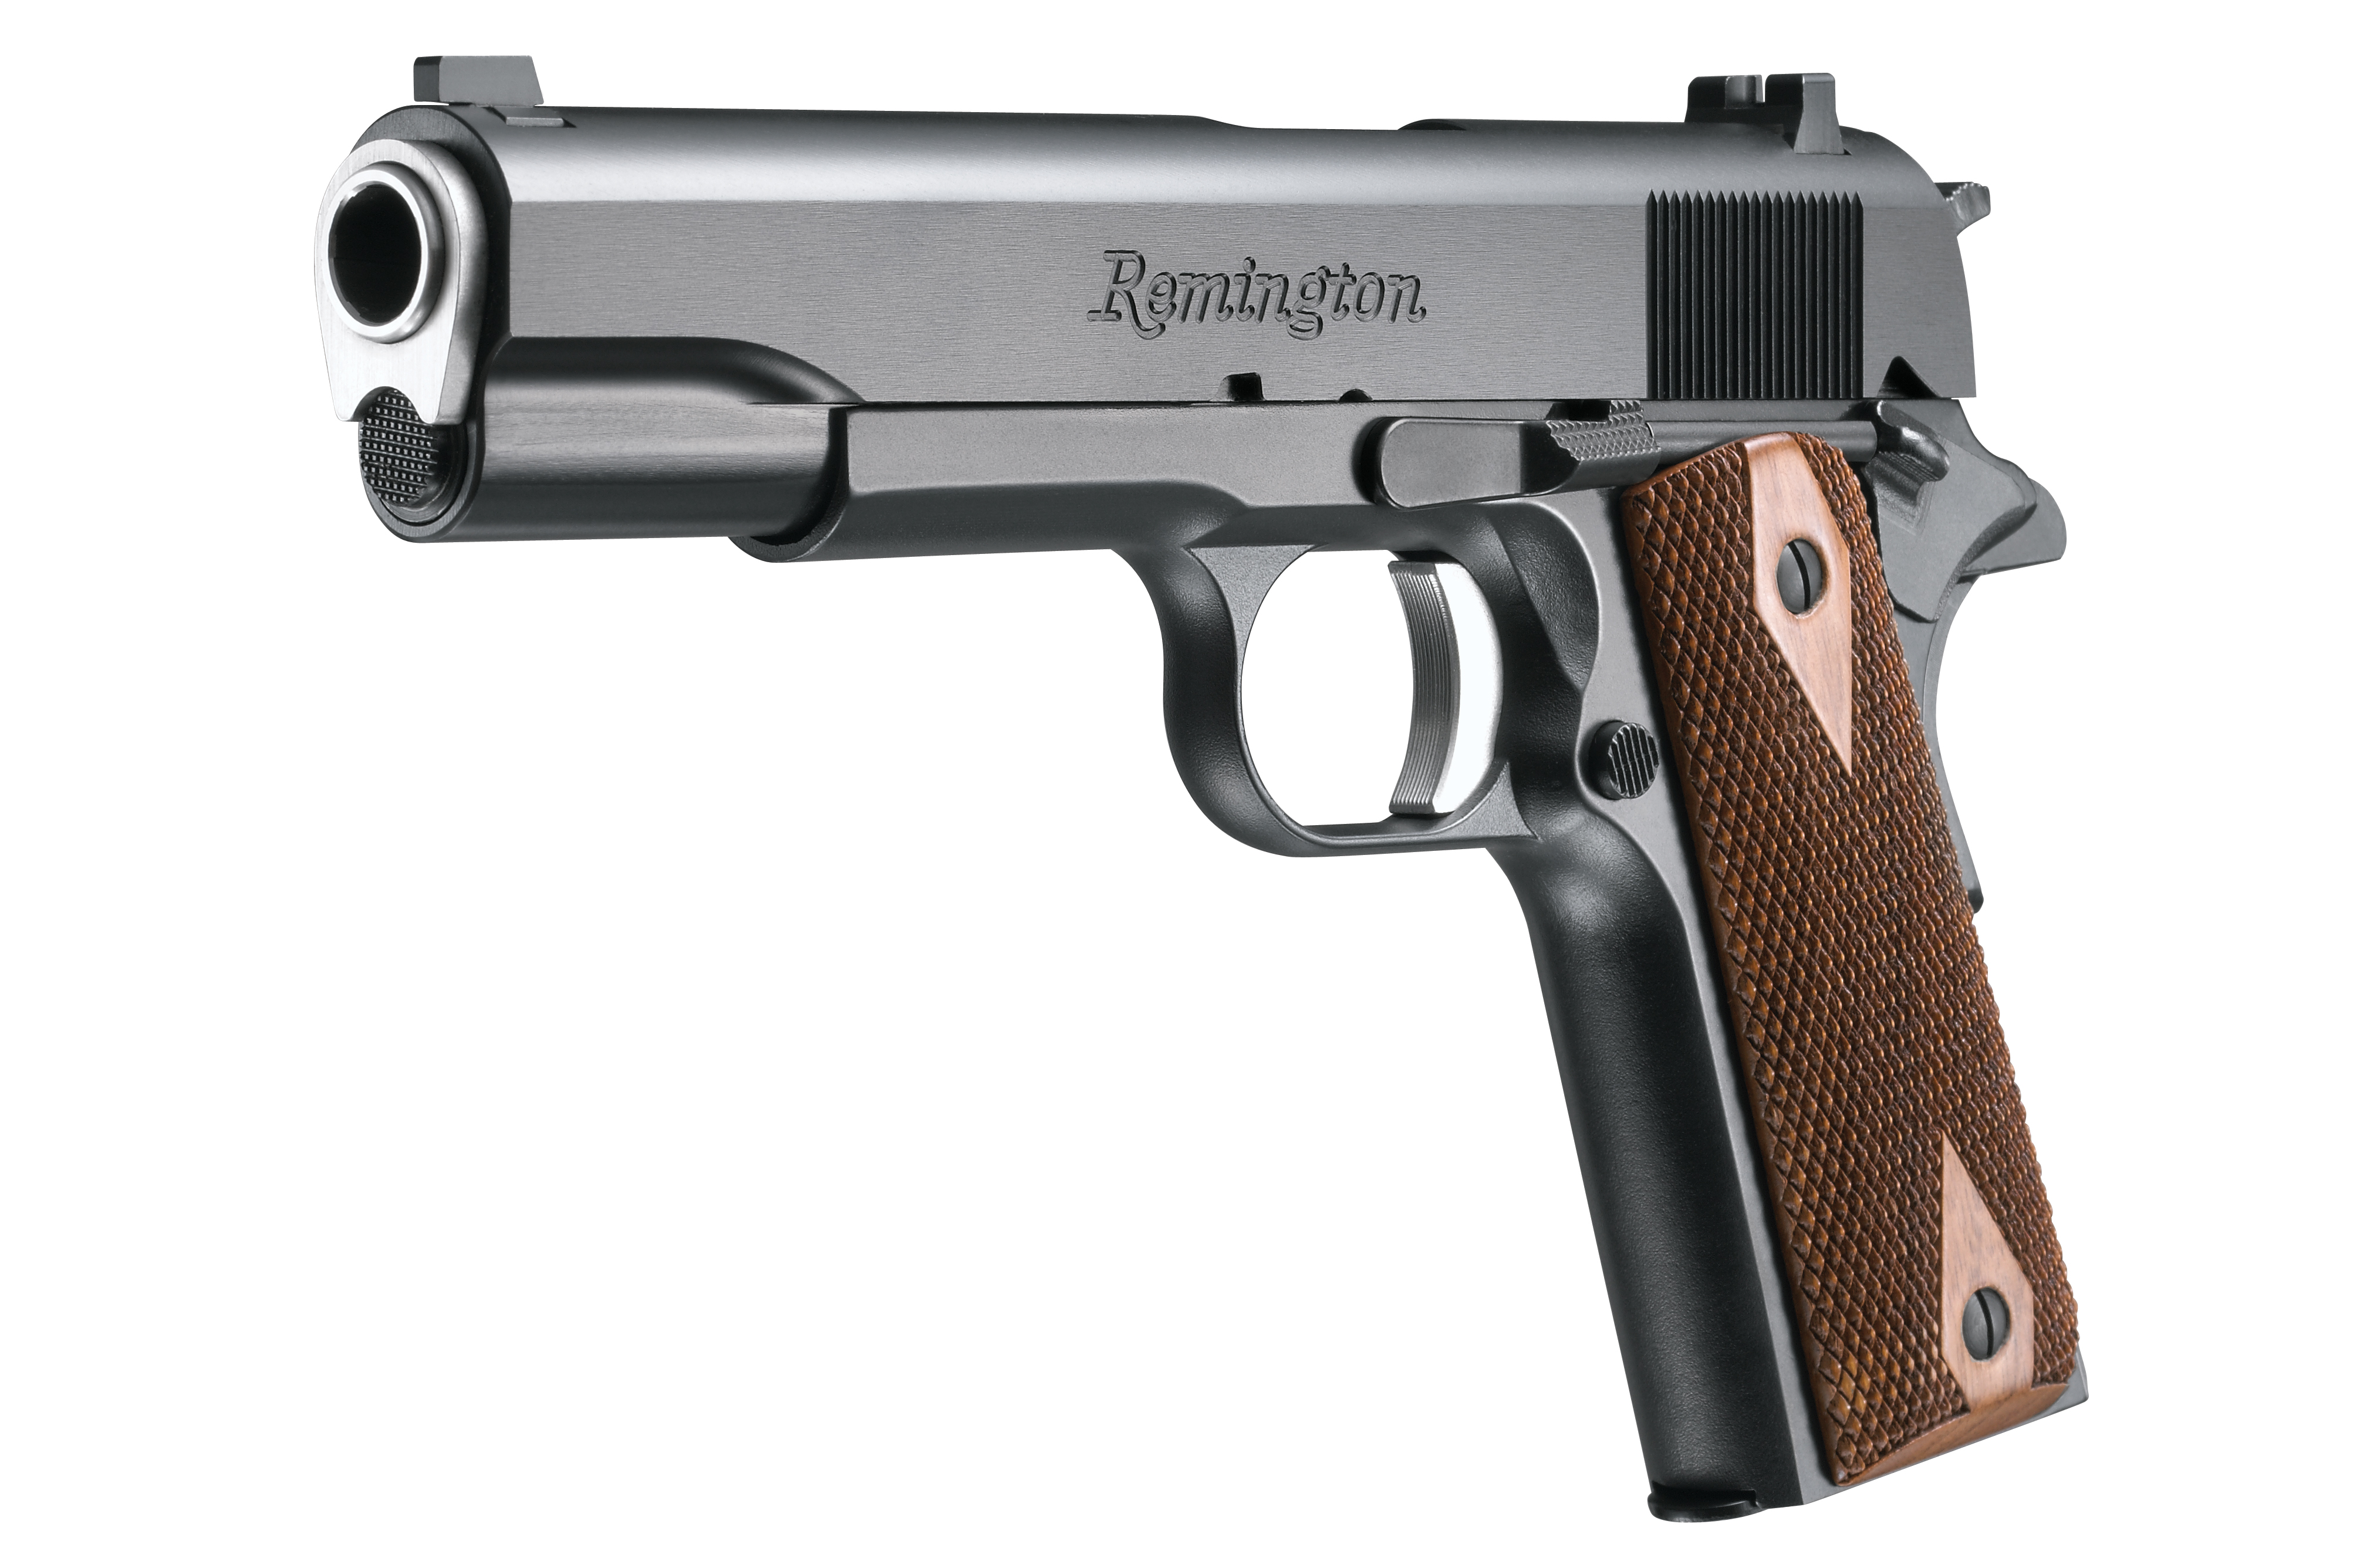 Man Made Remington Pistol HD Wallpaper | Background Image